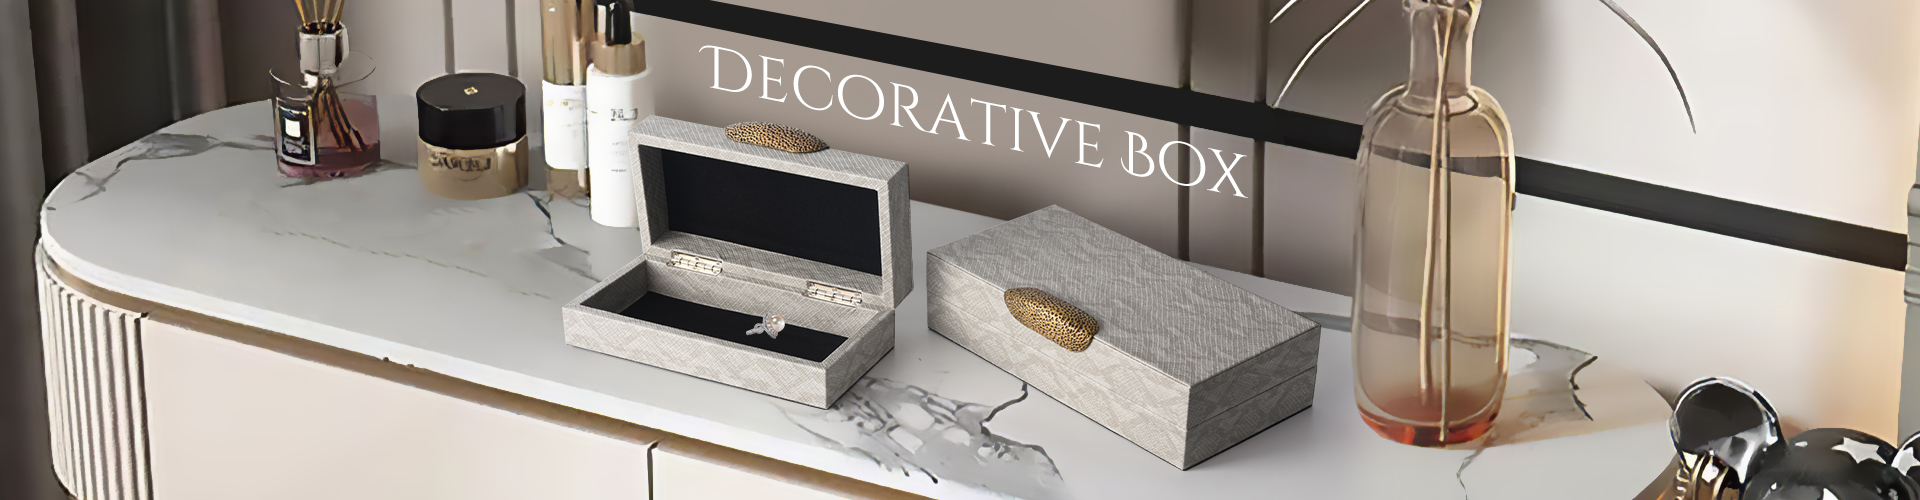 decorative-box